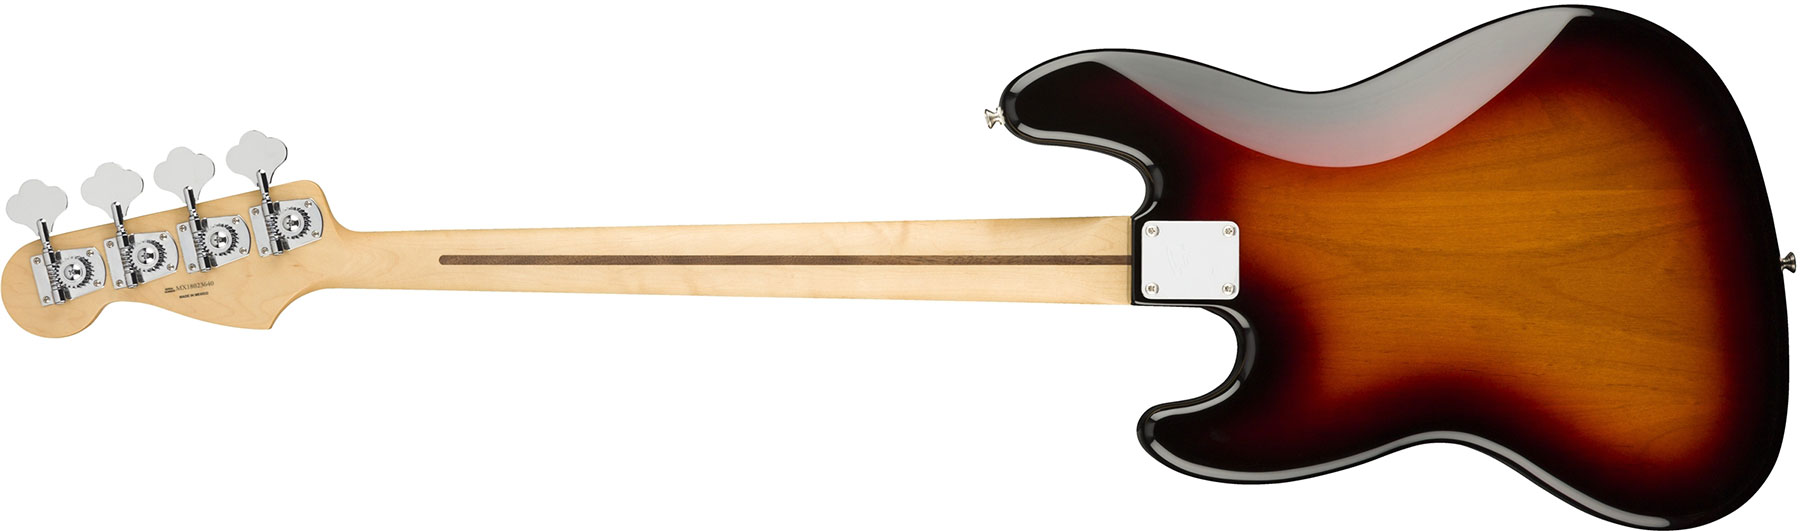 Fender Jazz Bass Player Mex Pf - 3-color Sunburst - Solidbody E-bass - Variation 1